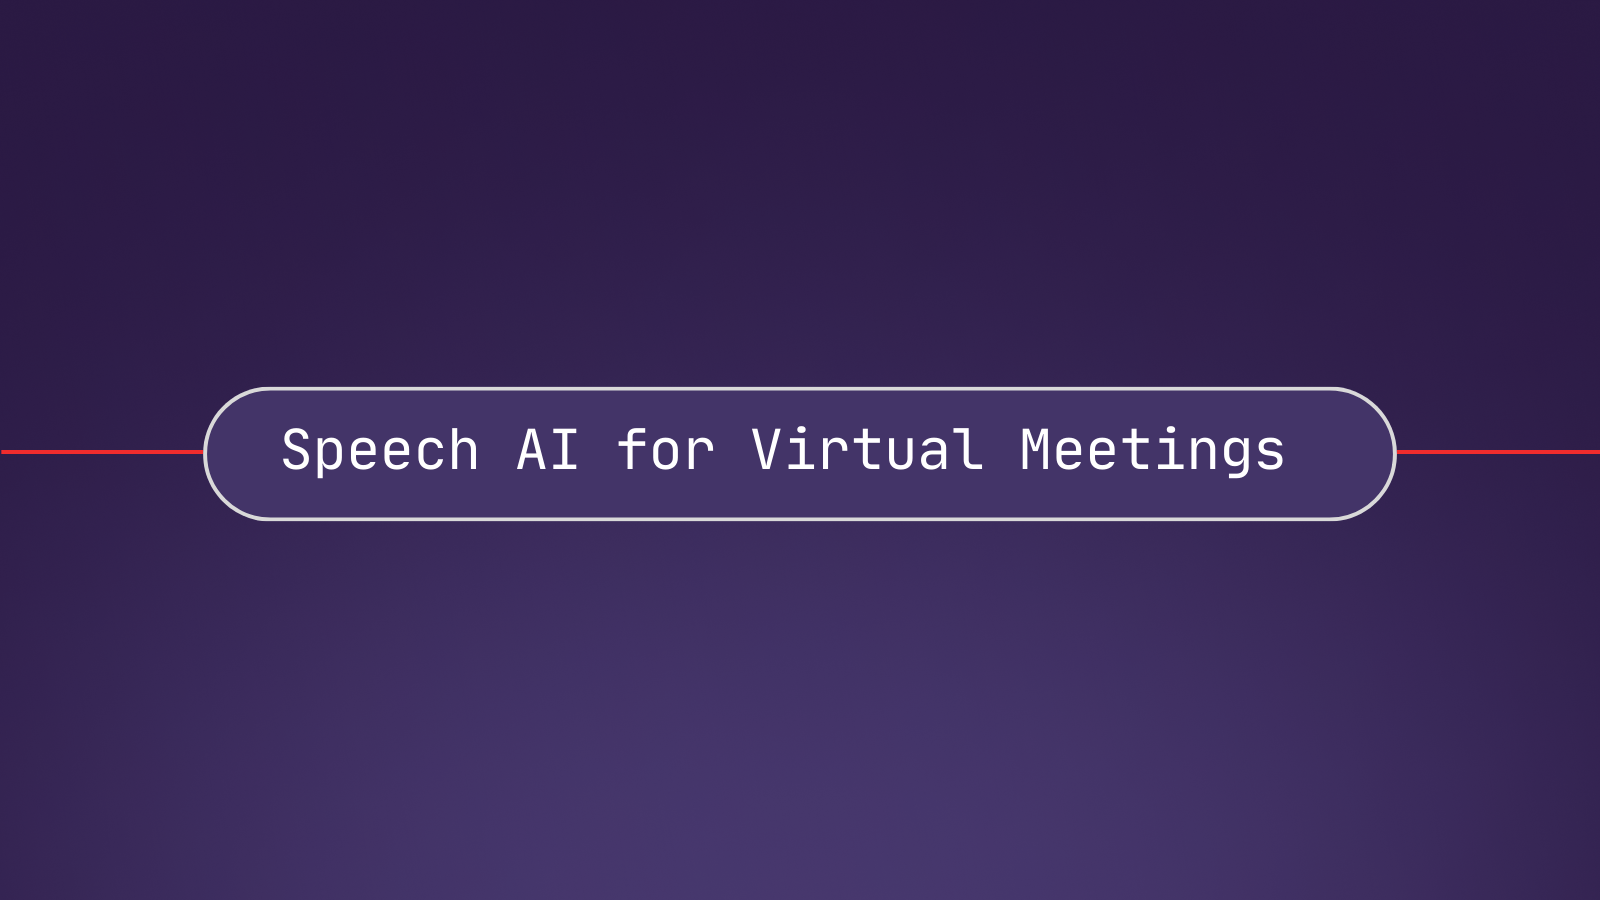 Why Virtual Meeting Companies Should Use Speech AI